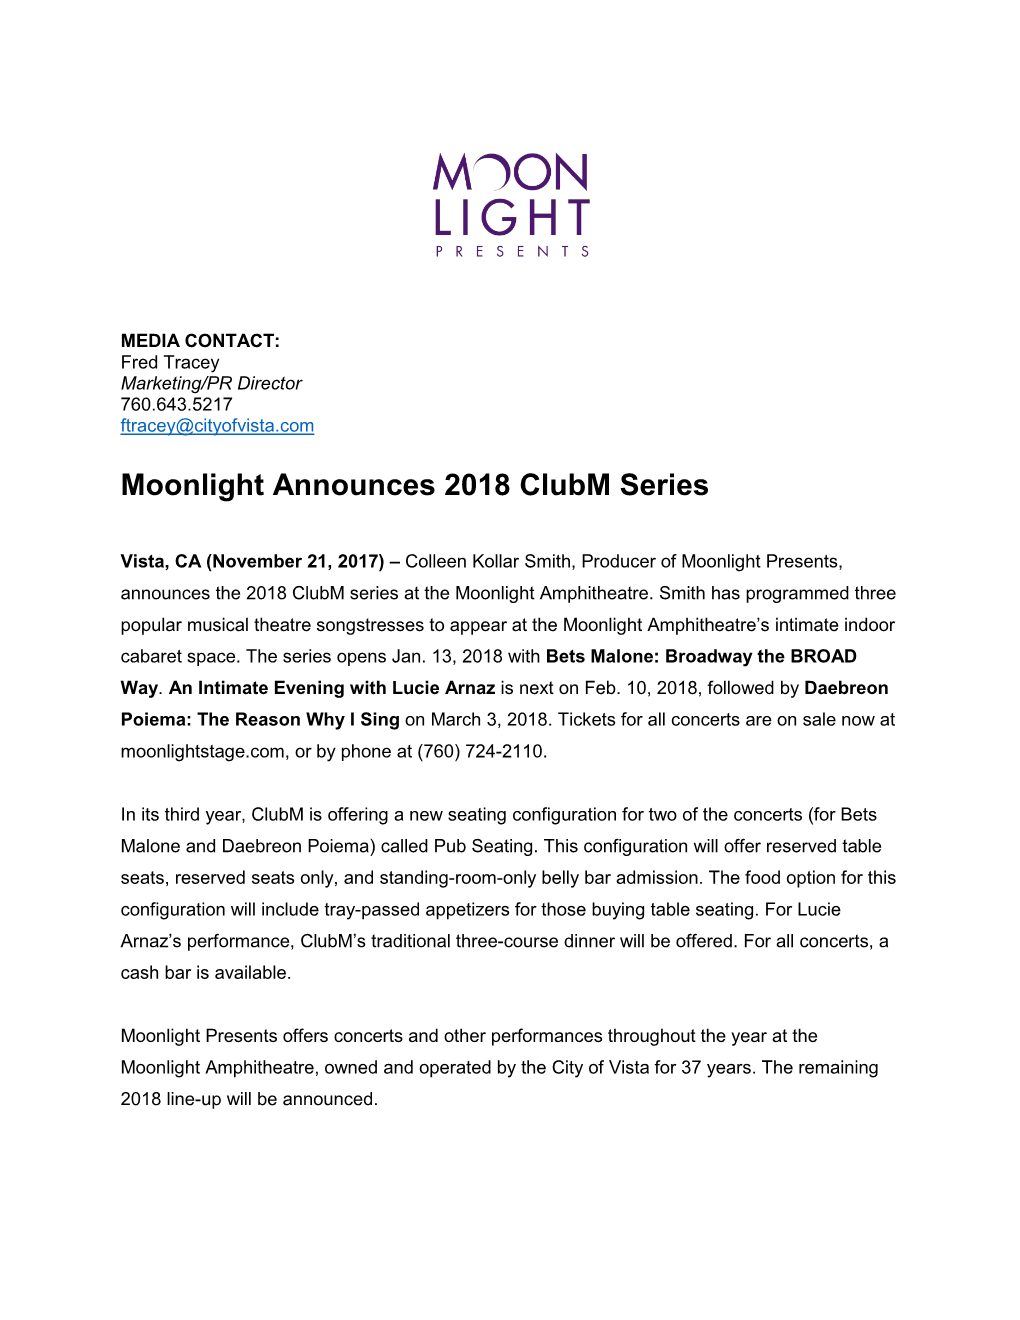 Moonlight Announces 2018 Clubm Series